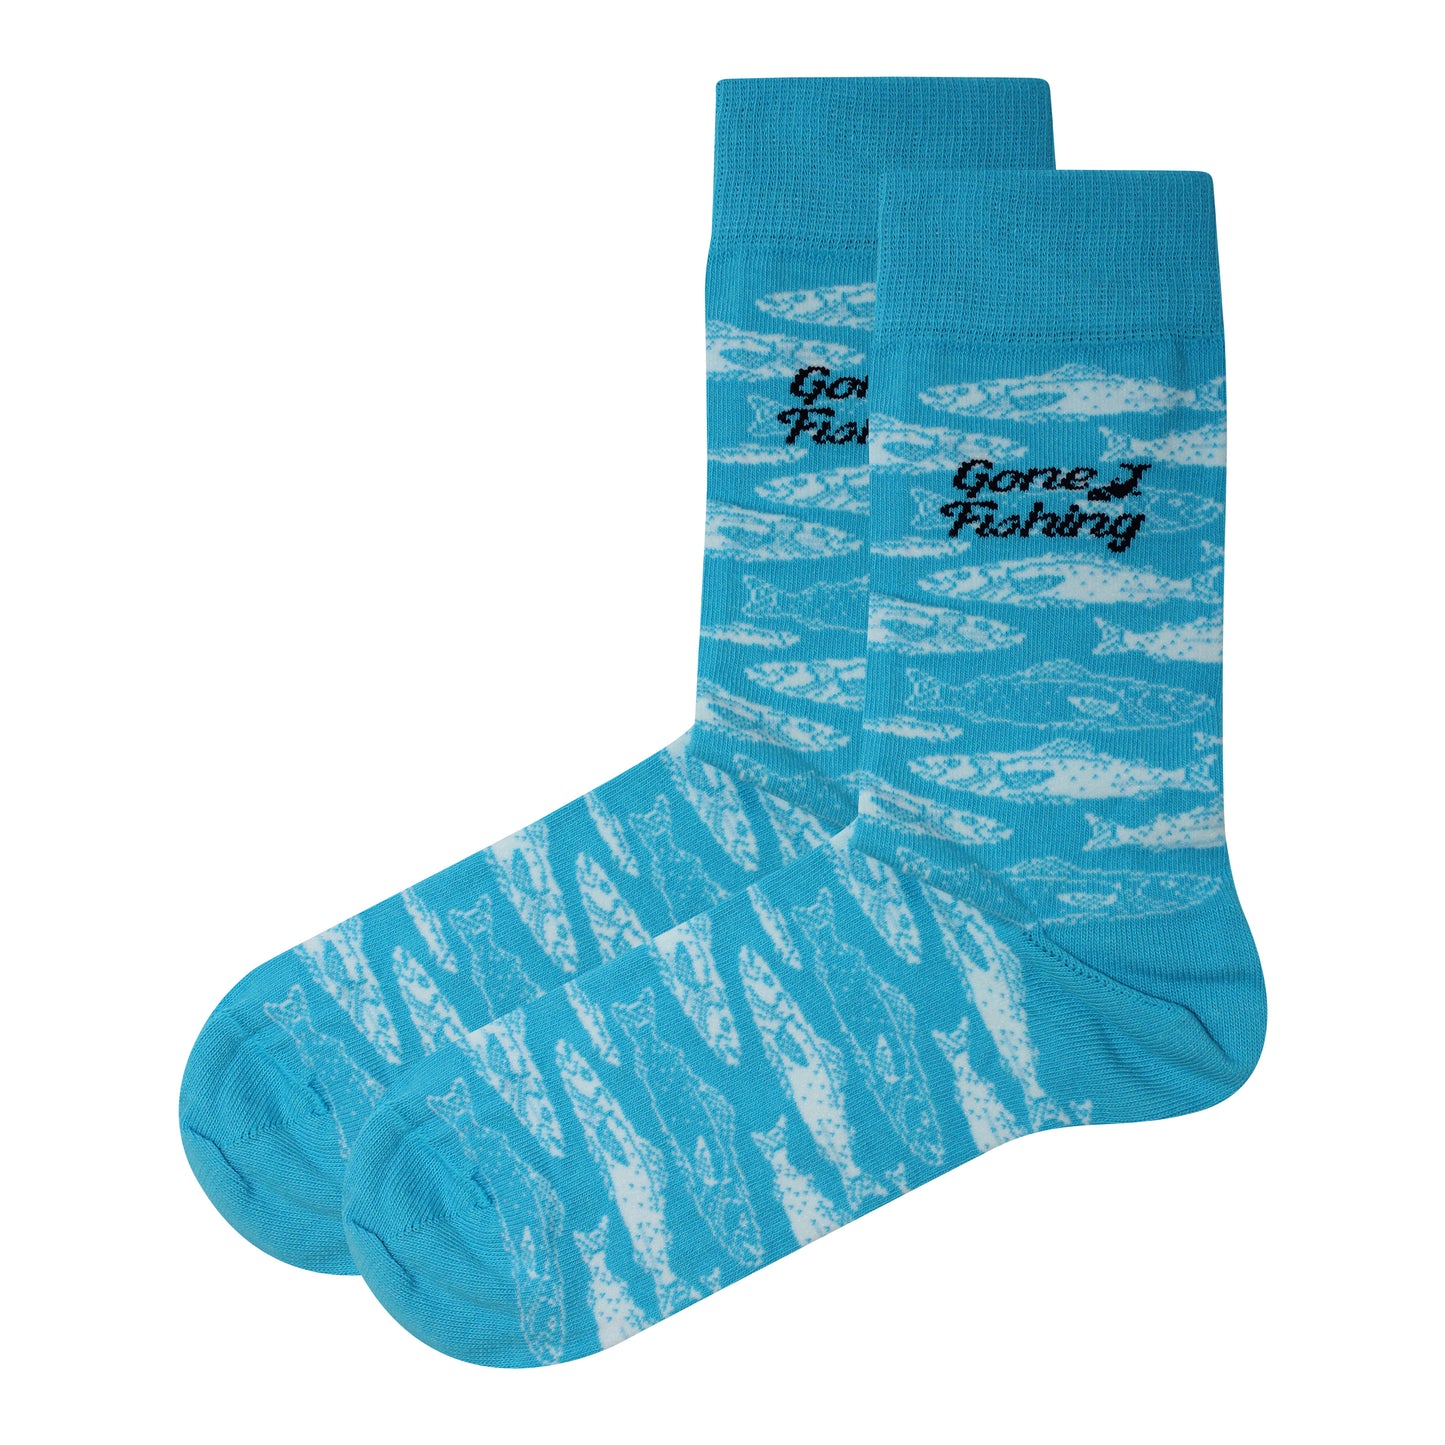 'Gone Fishing' Socks